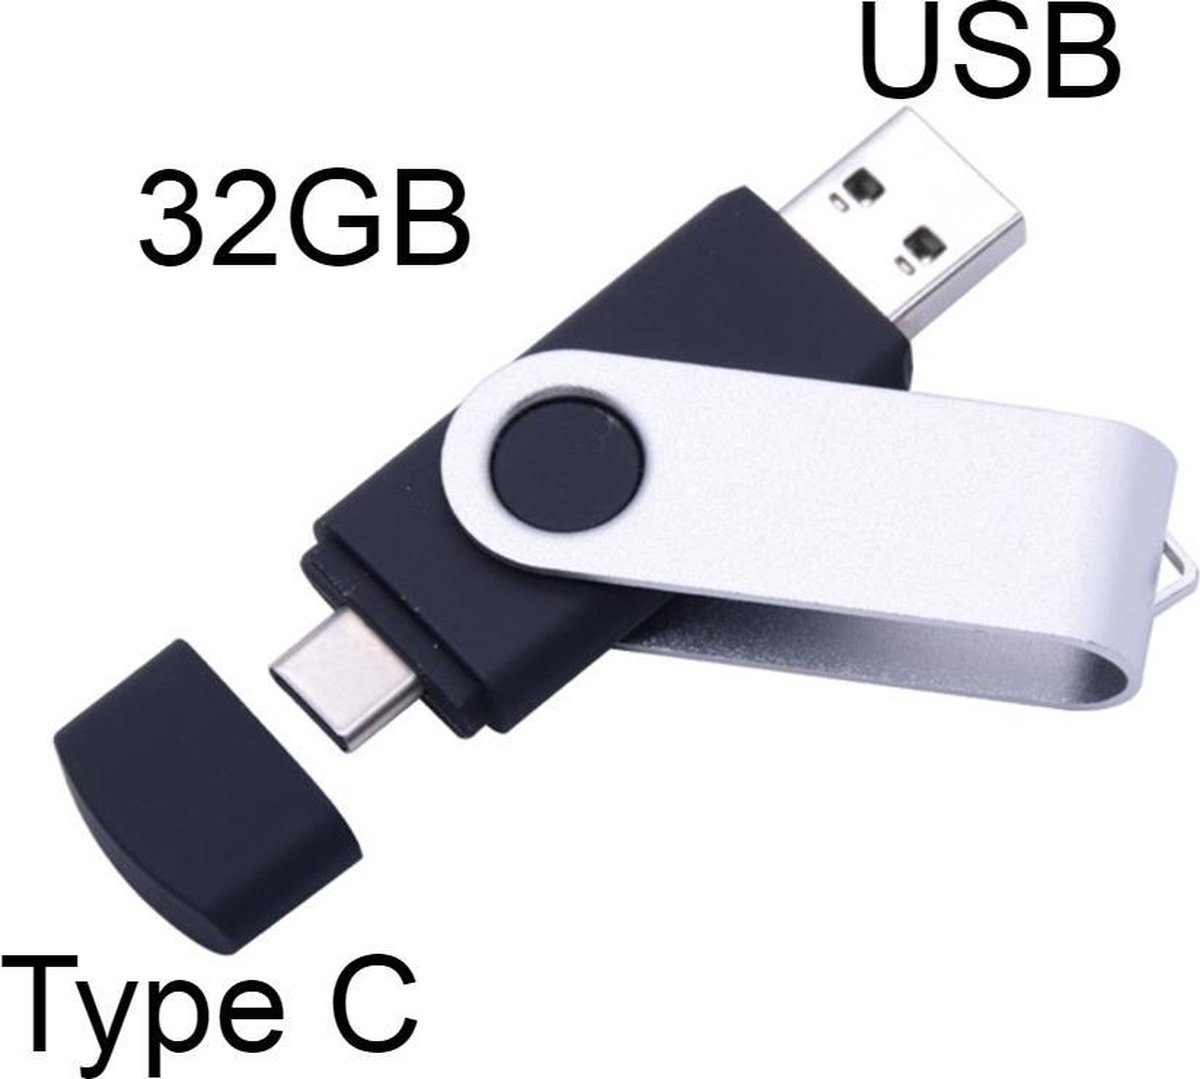 2 Pièces USB-C USB 3.0 Stick - 2 en 1 - Memory Stick - Flash Drive